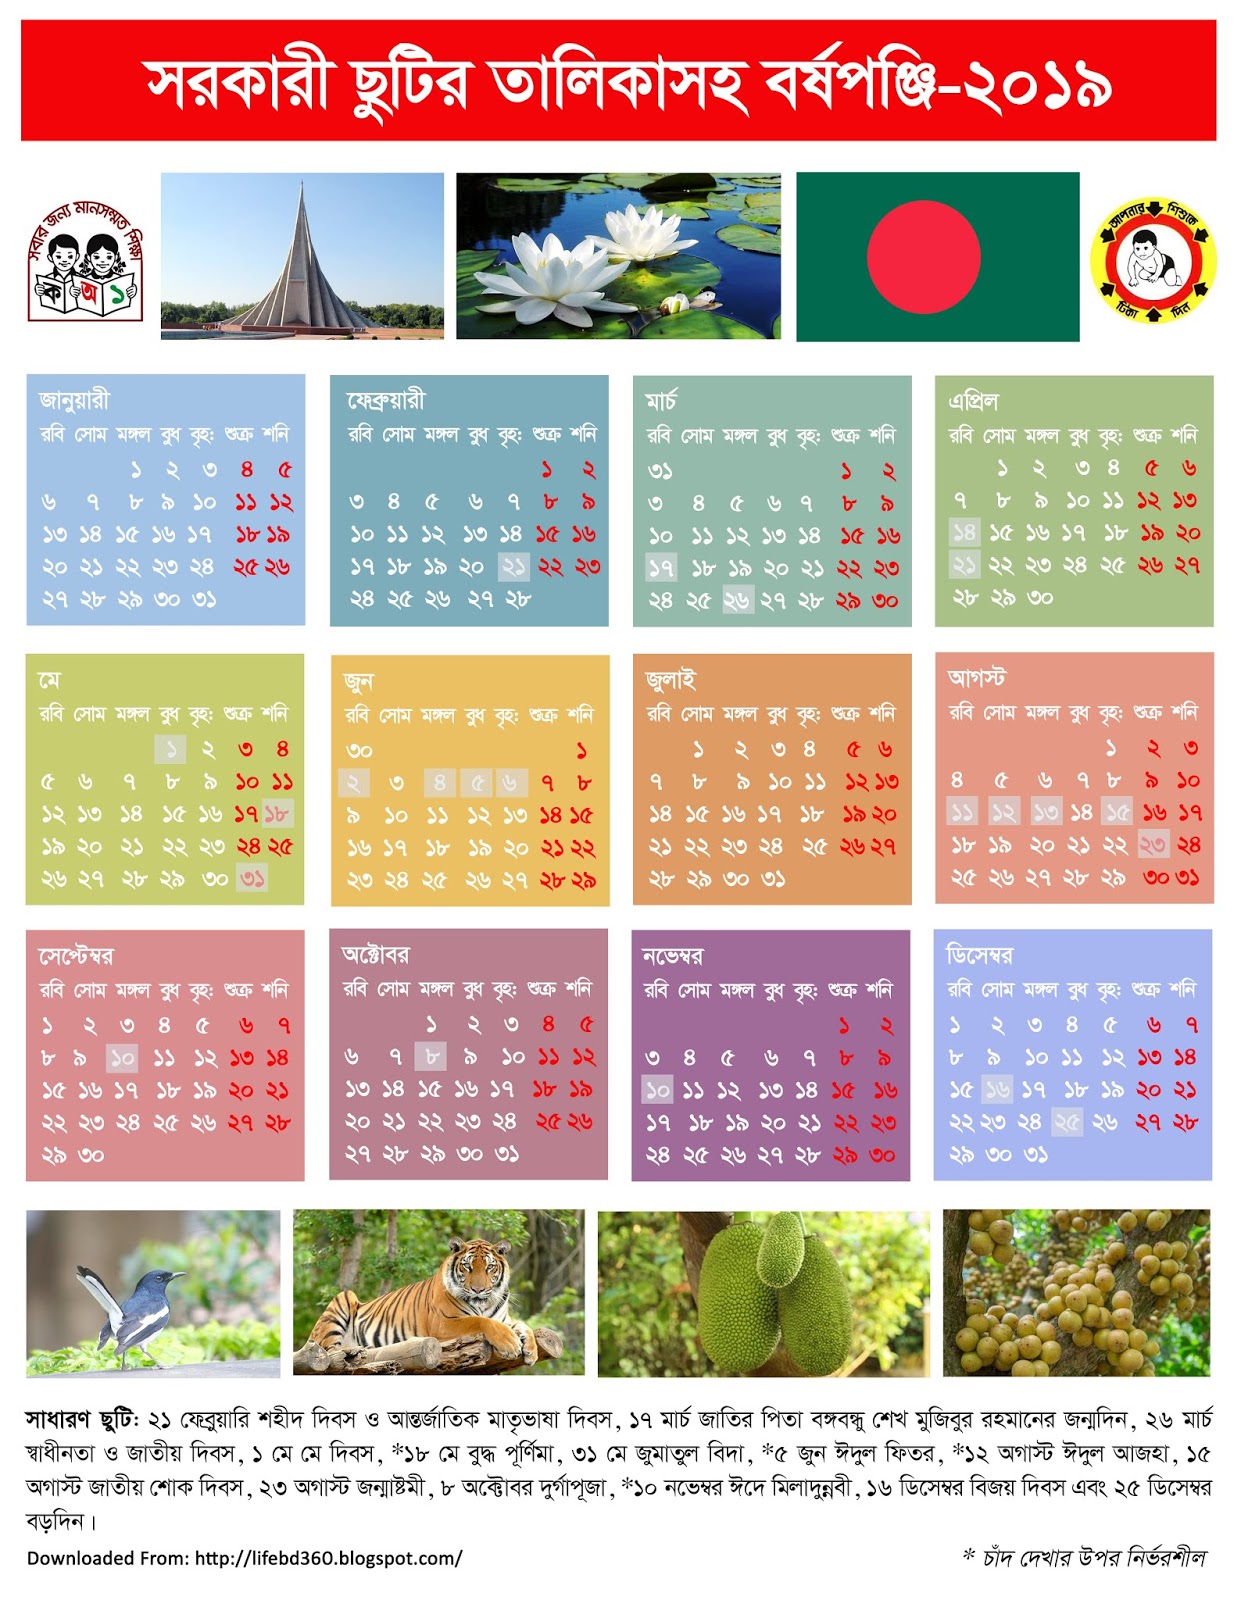 bangladesh-government-holiday-calendar-2019-life-in-bangladesh